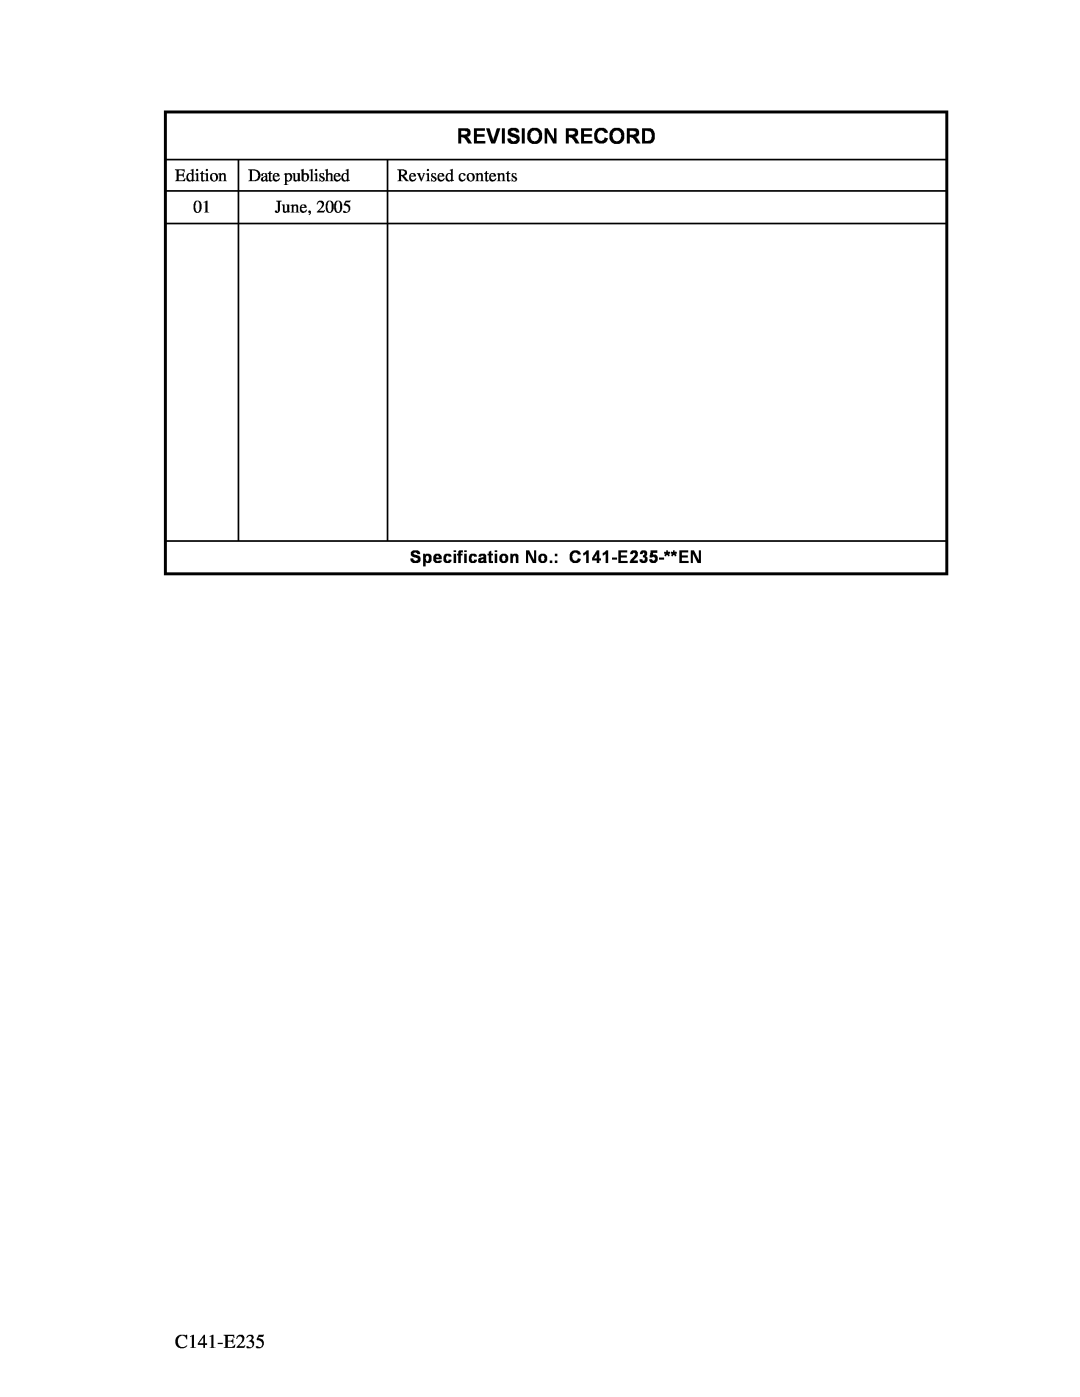 Fujitsu MAW3073fc, MAW3300FC, MAW3147FC manual Revision Record, Specification No. C141-E235-**EN 